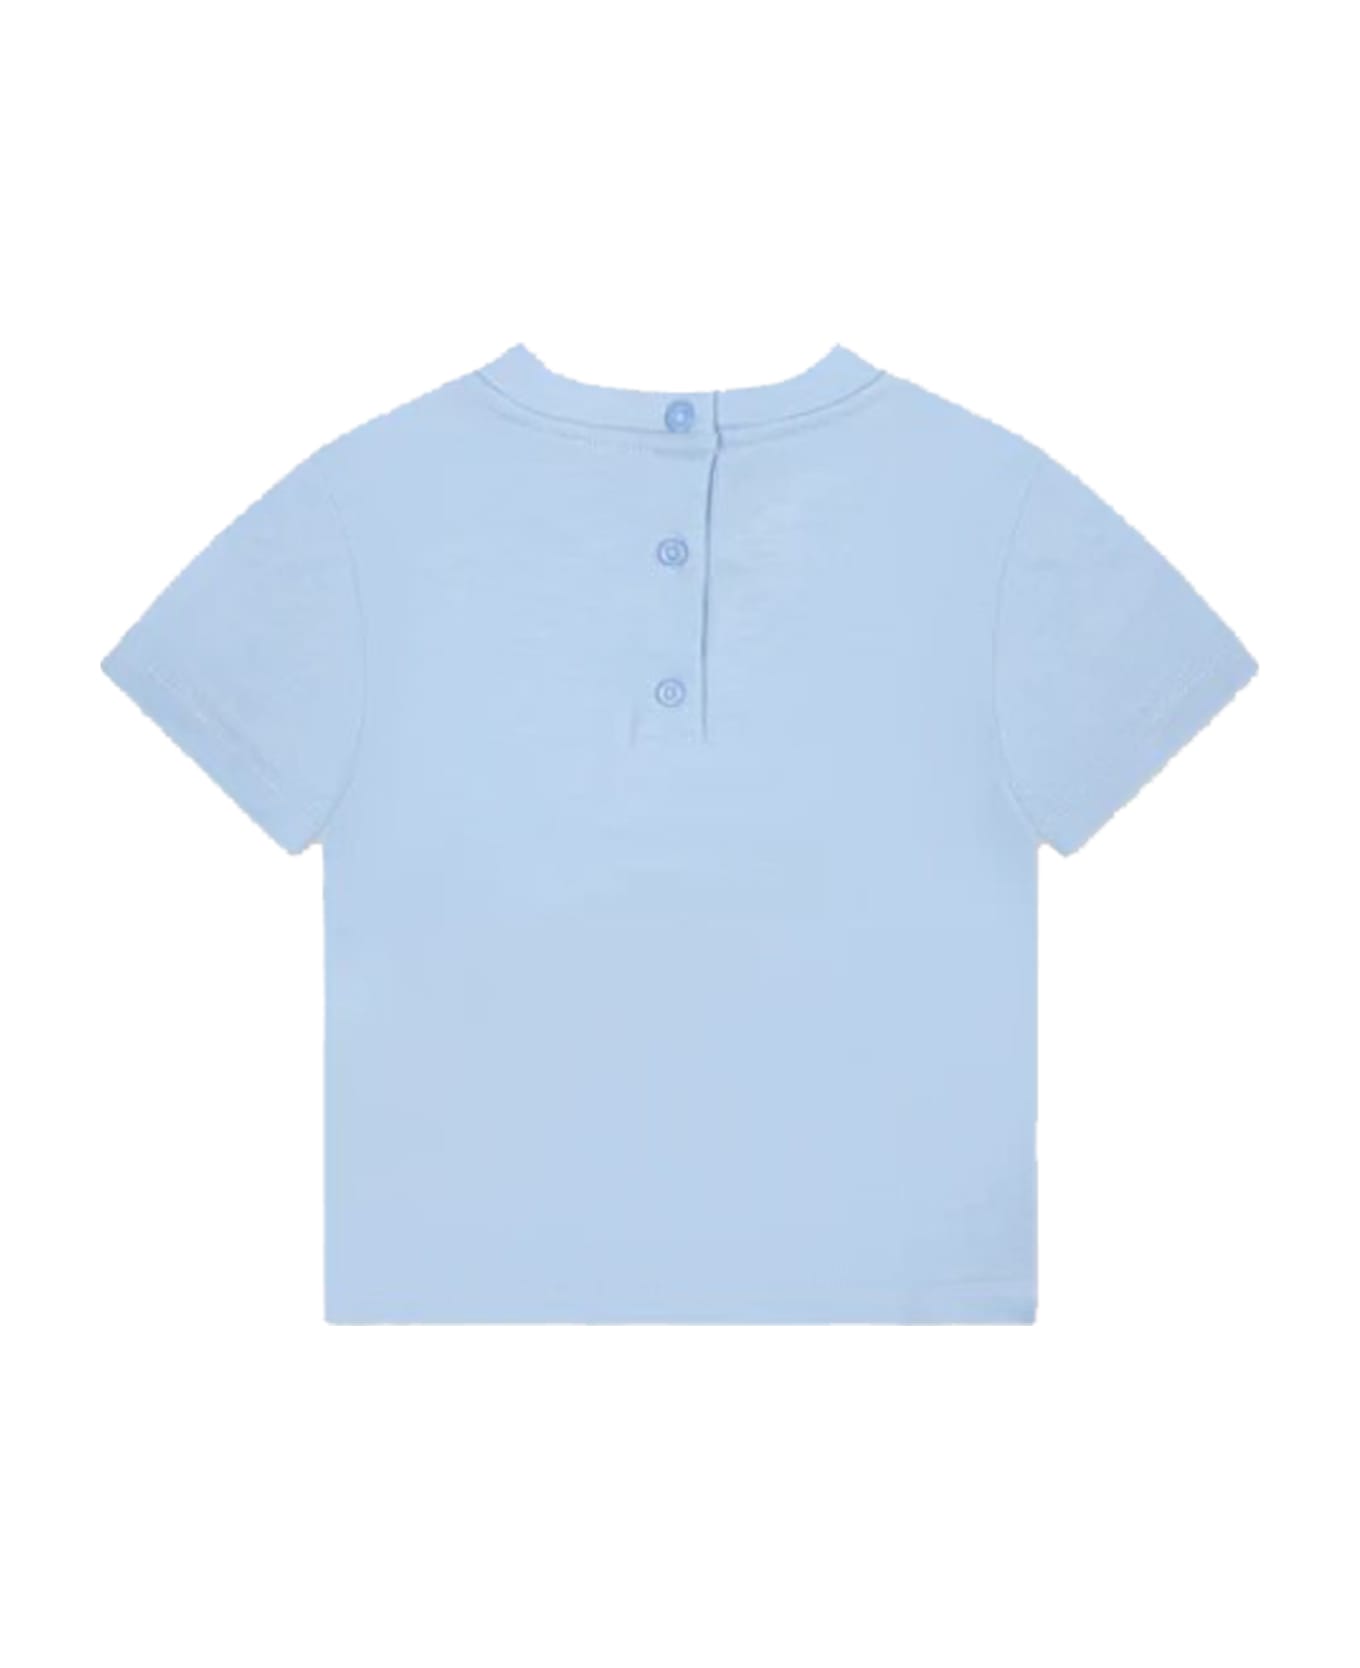 Fendi Baby T-shirt - Light blue